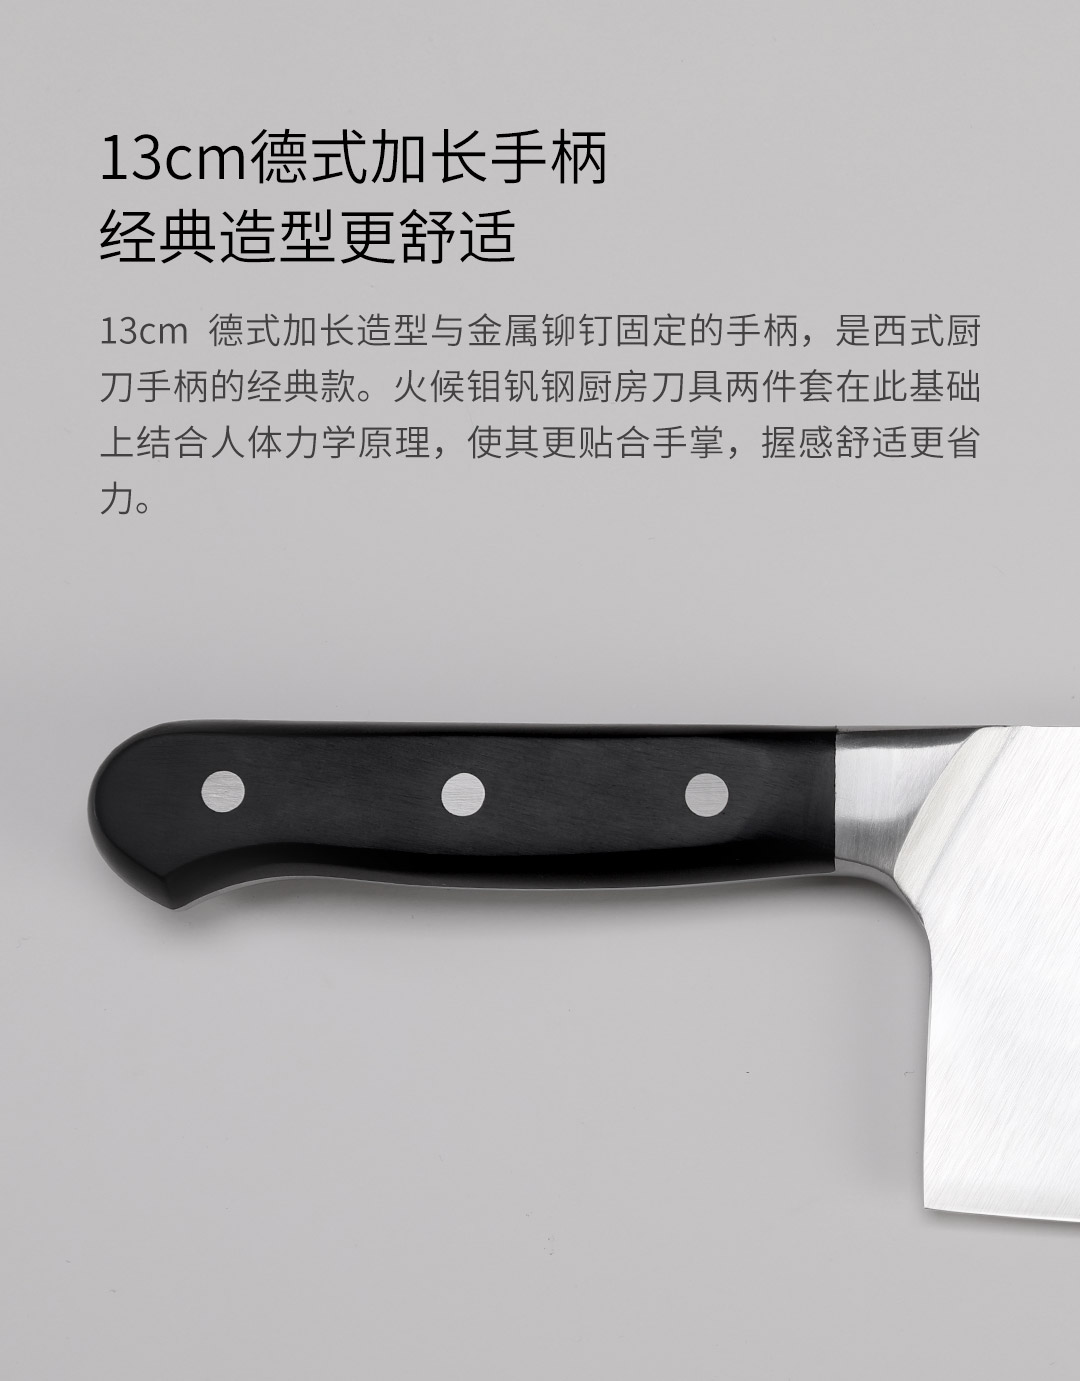 Product_奇妙_火候钼钒钢厨刀22.jpg